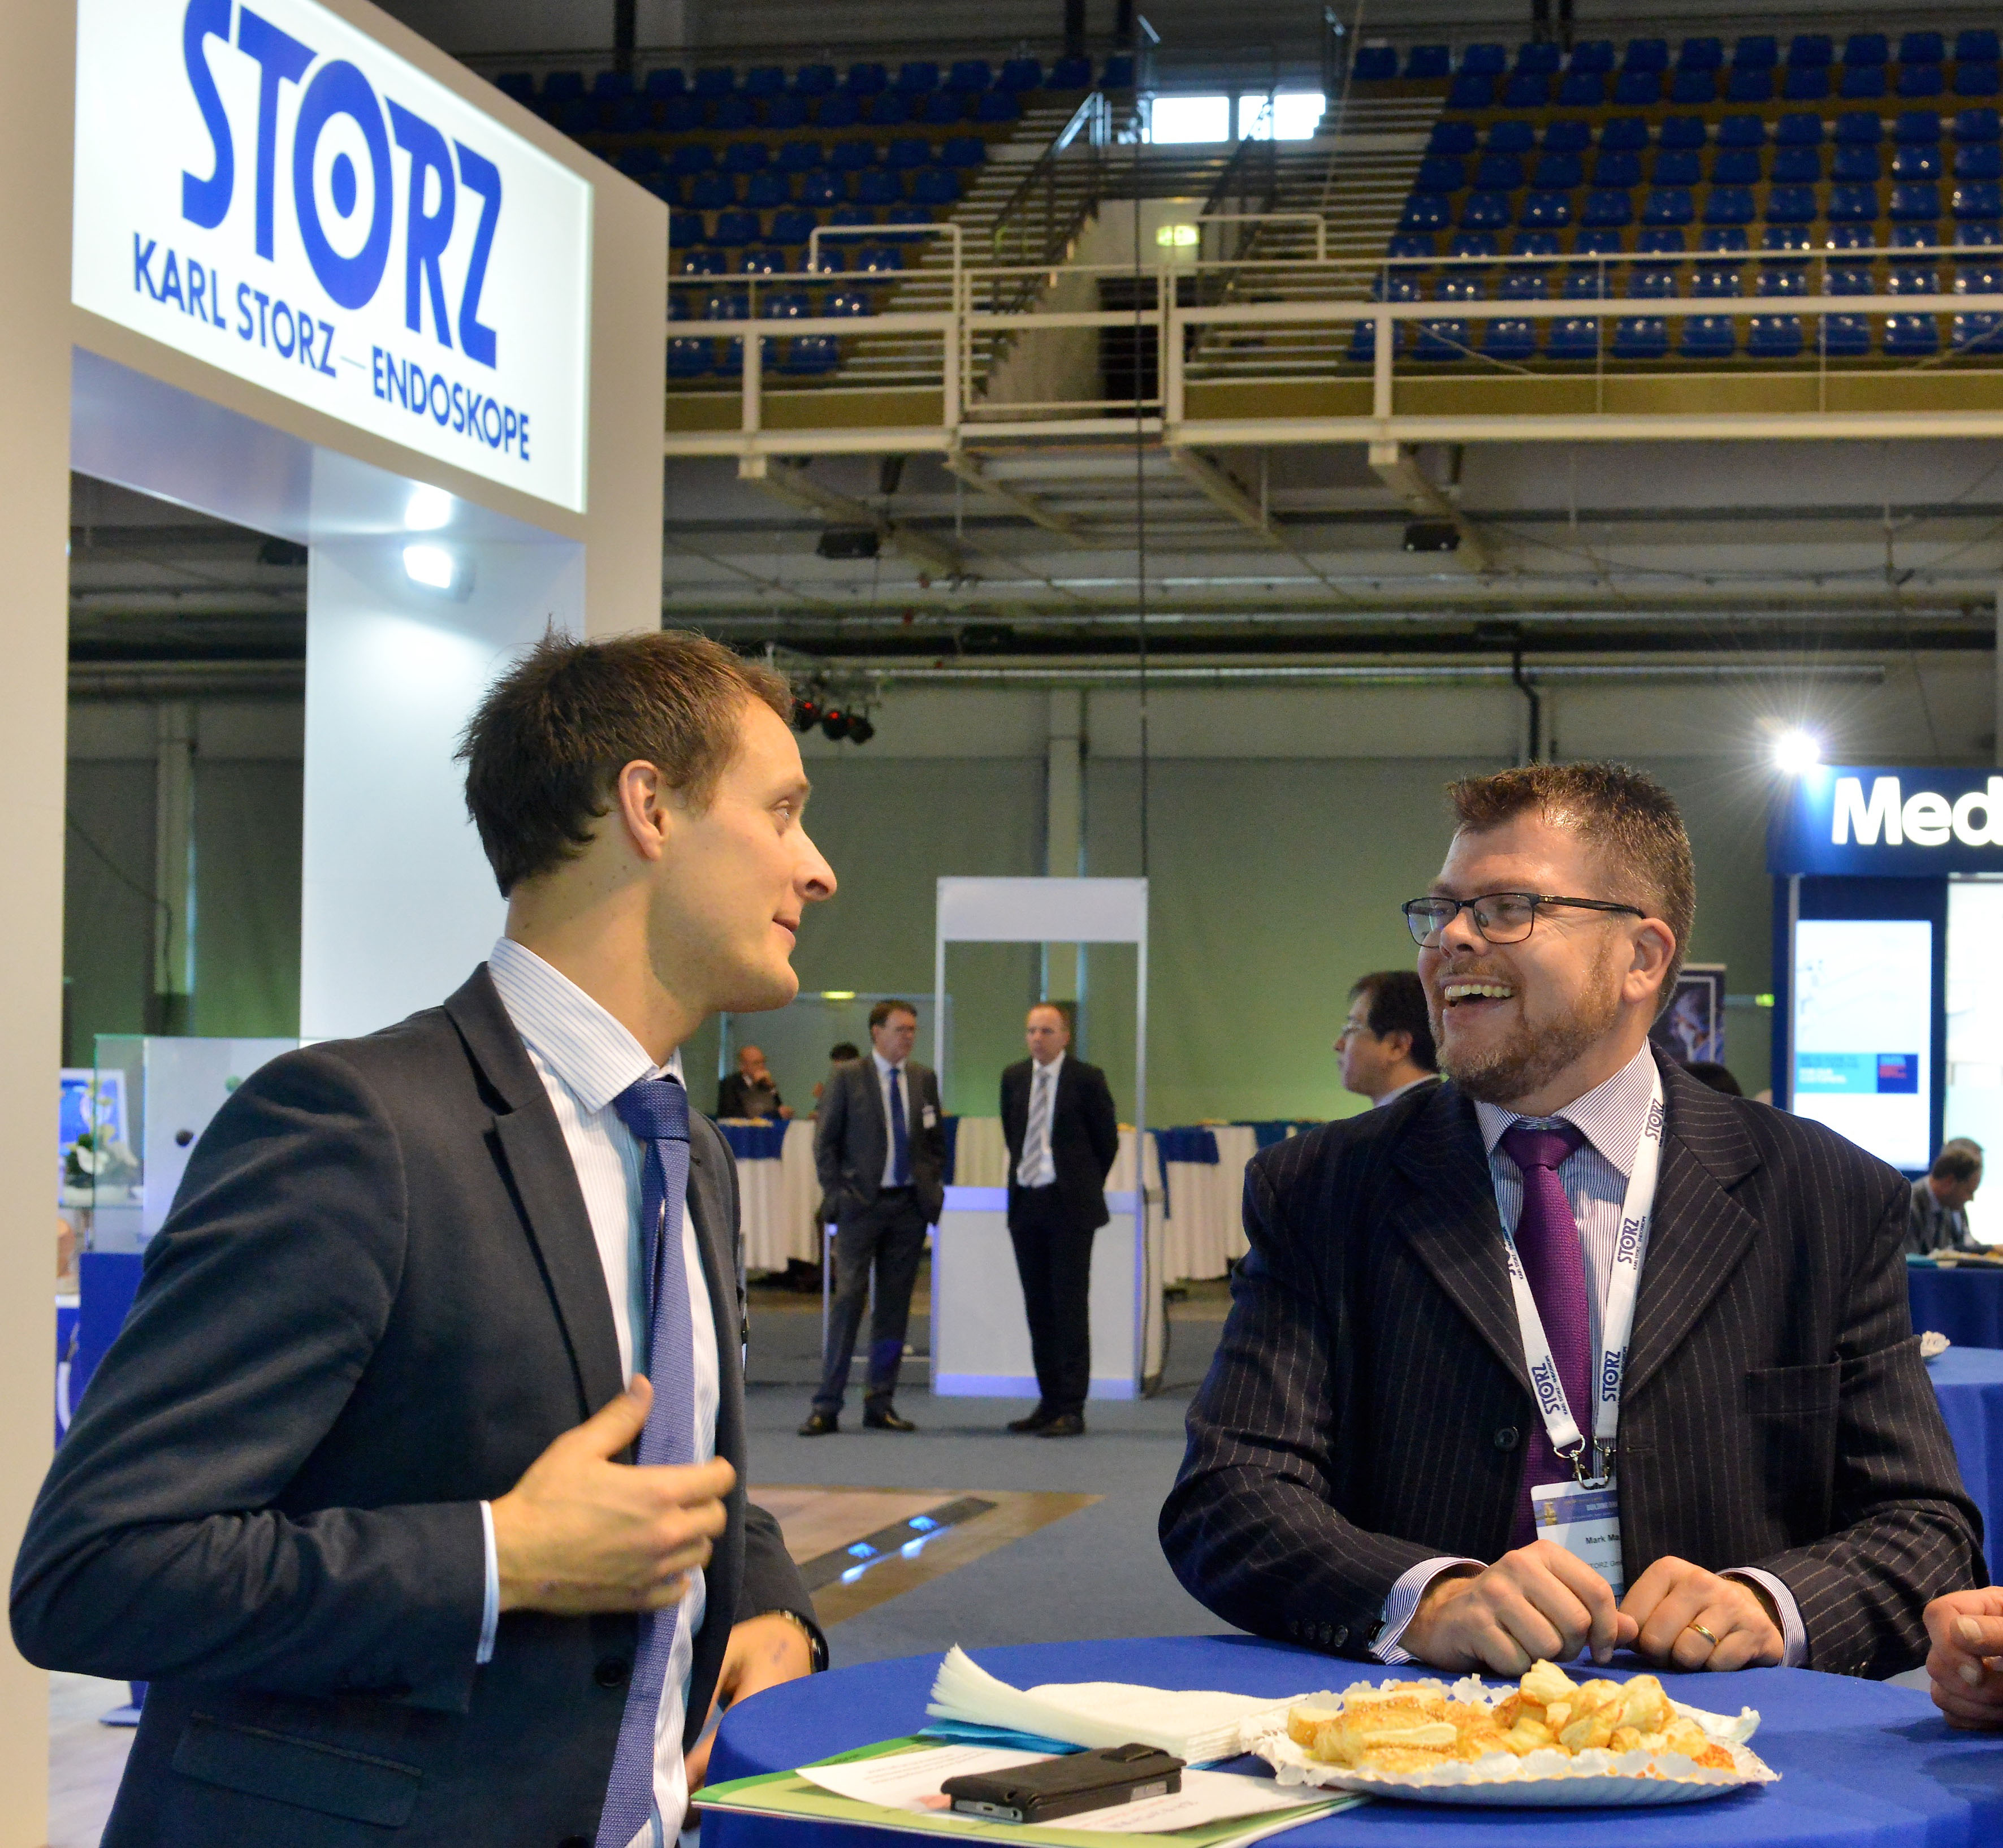 Budapest storz stand / ESGE congress 2015